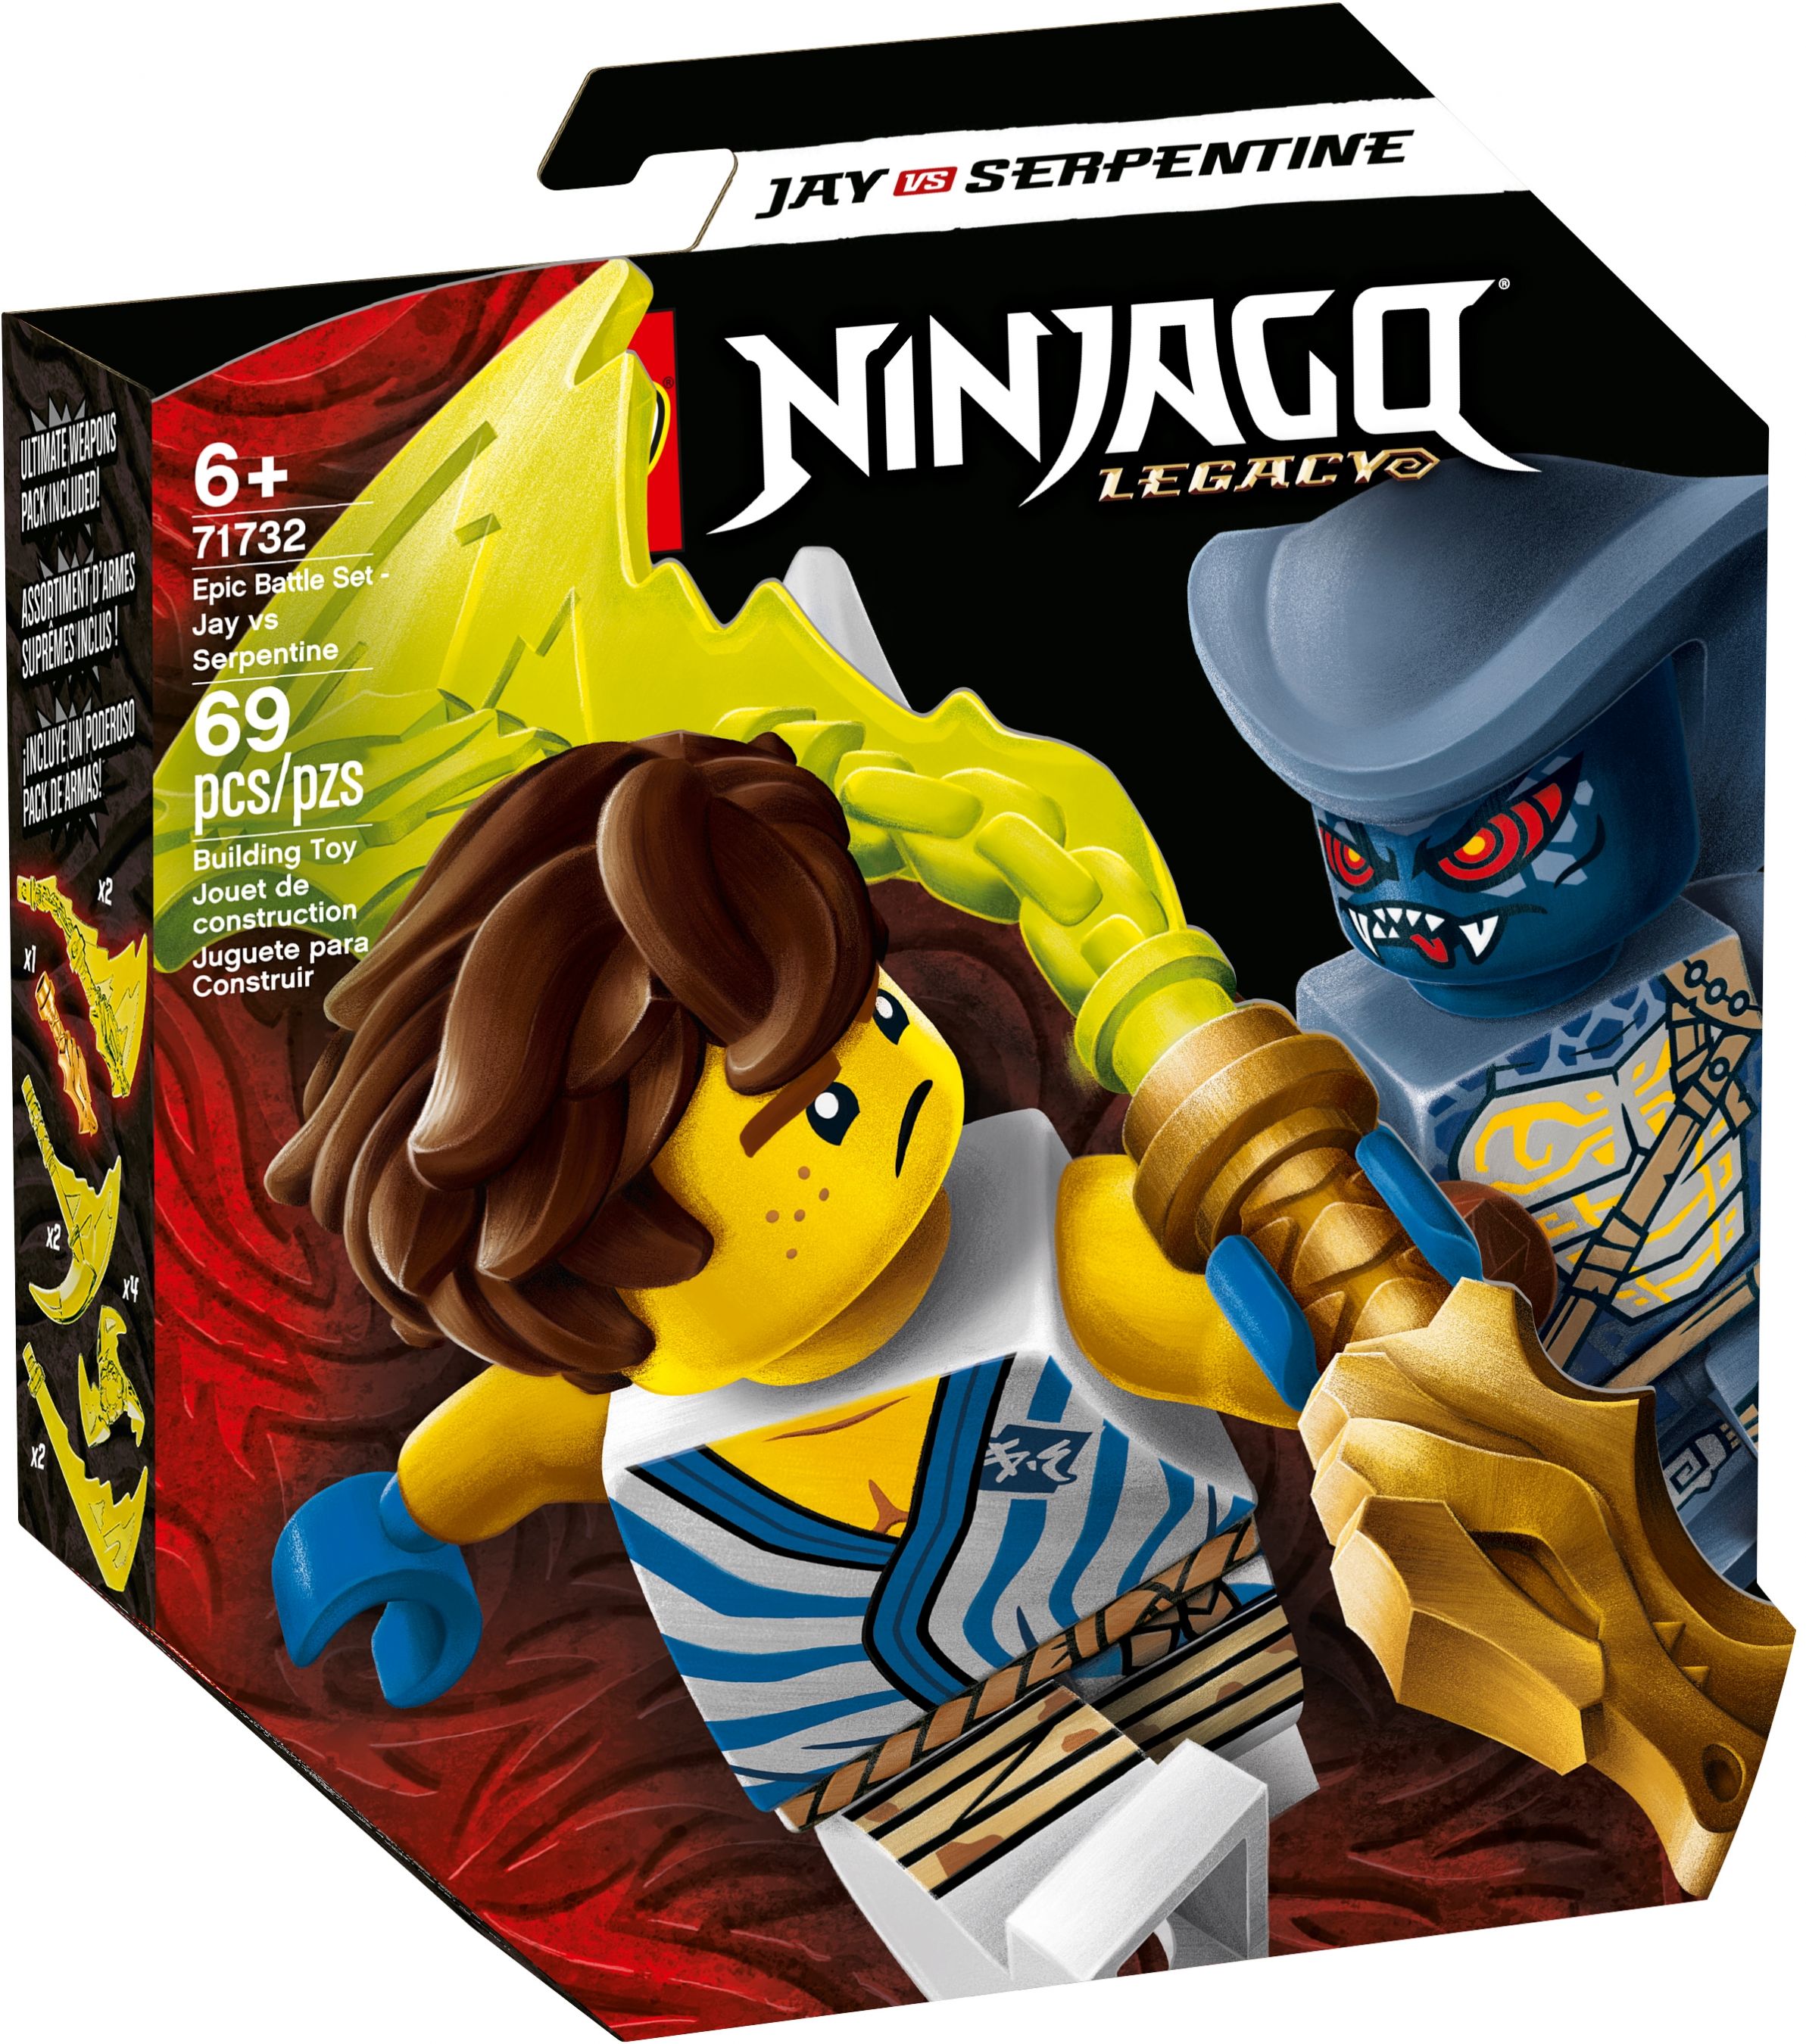 LEGO Ninjago 71732 Battle Set: Jay vs. Serpentine LEGO_71732_box1_v39.jpg